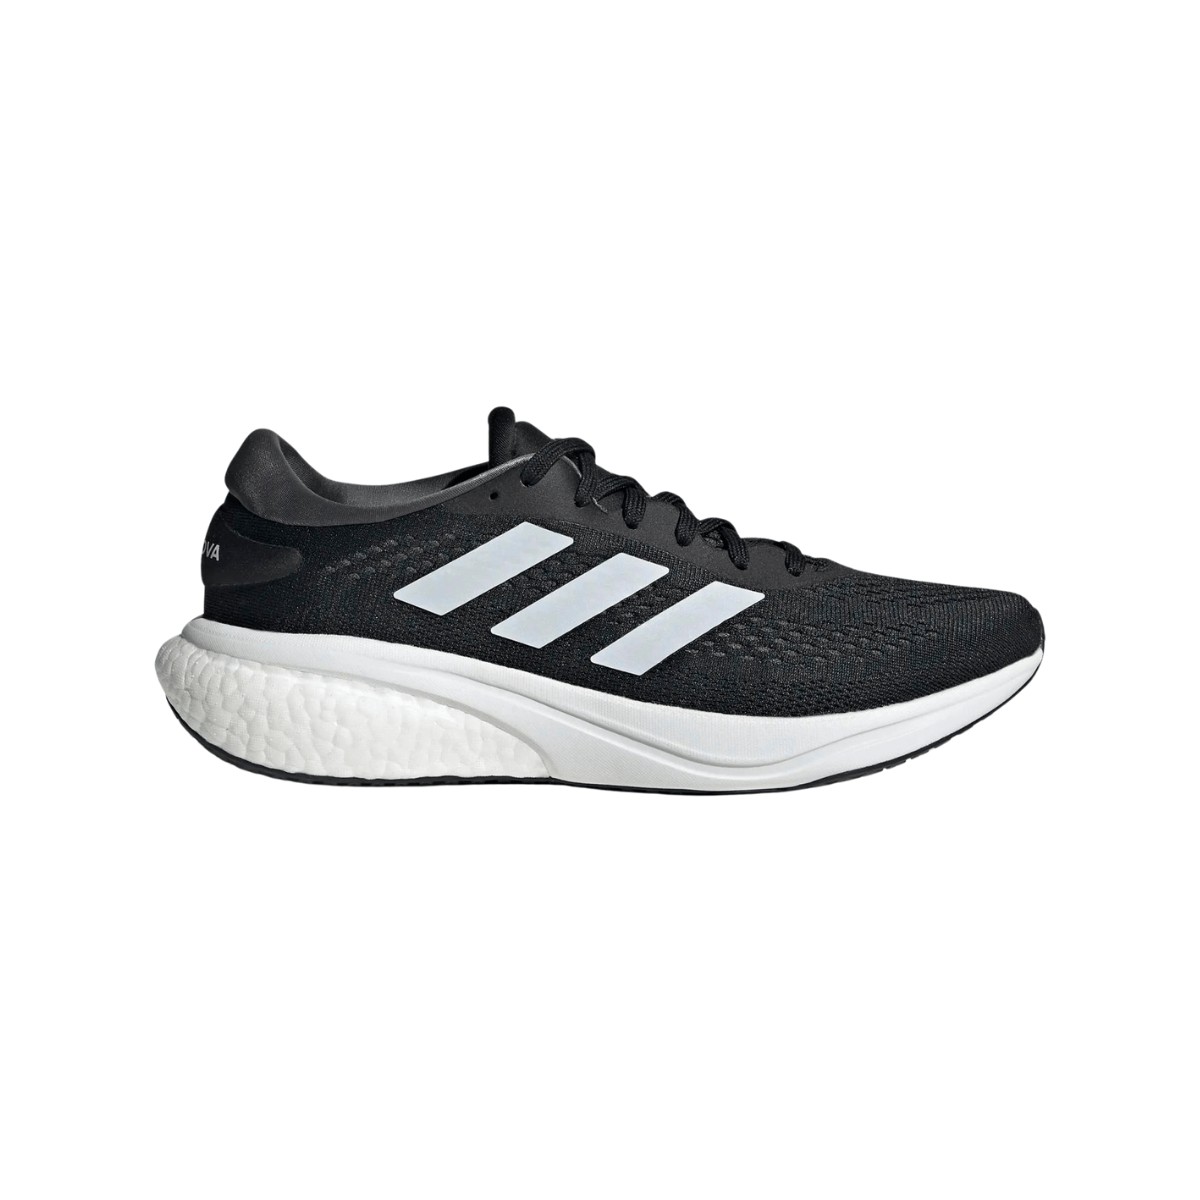 Chaussures Adidas Supernova 2.0 Noir Blanc AW22, Taille UK 7.5